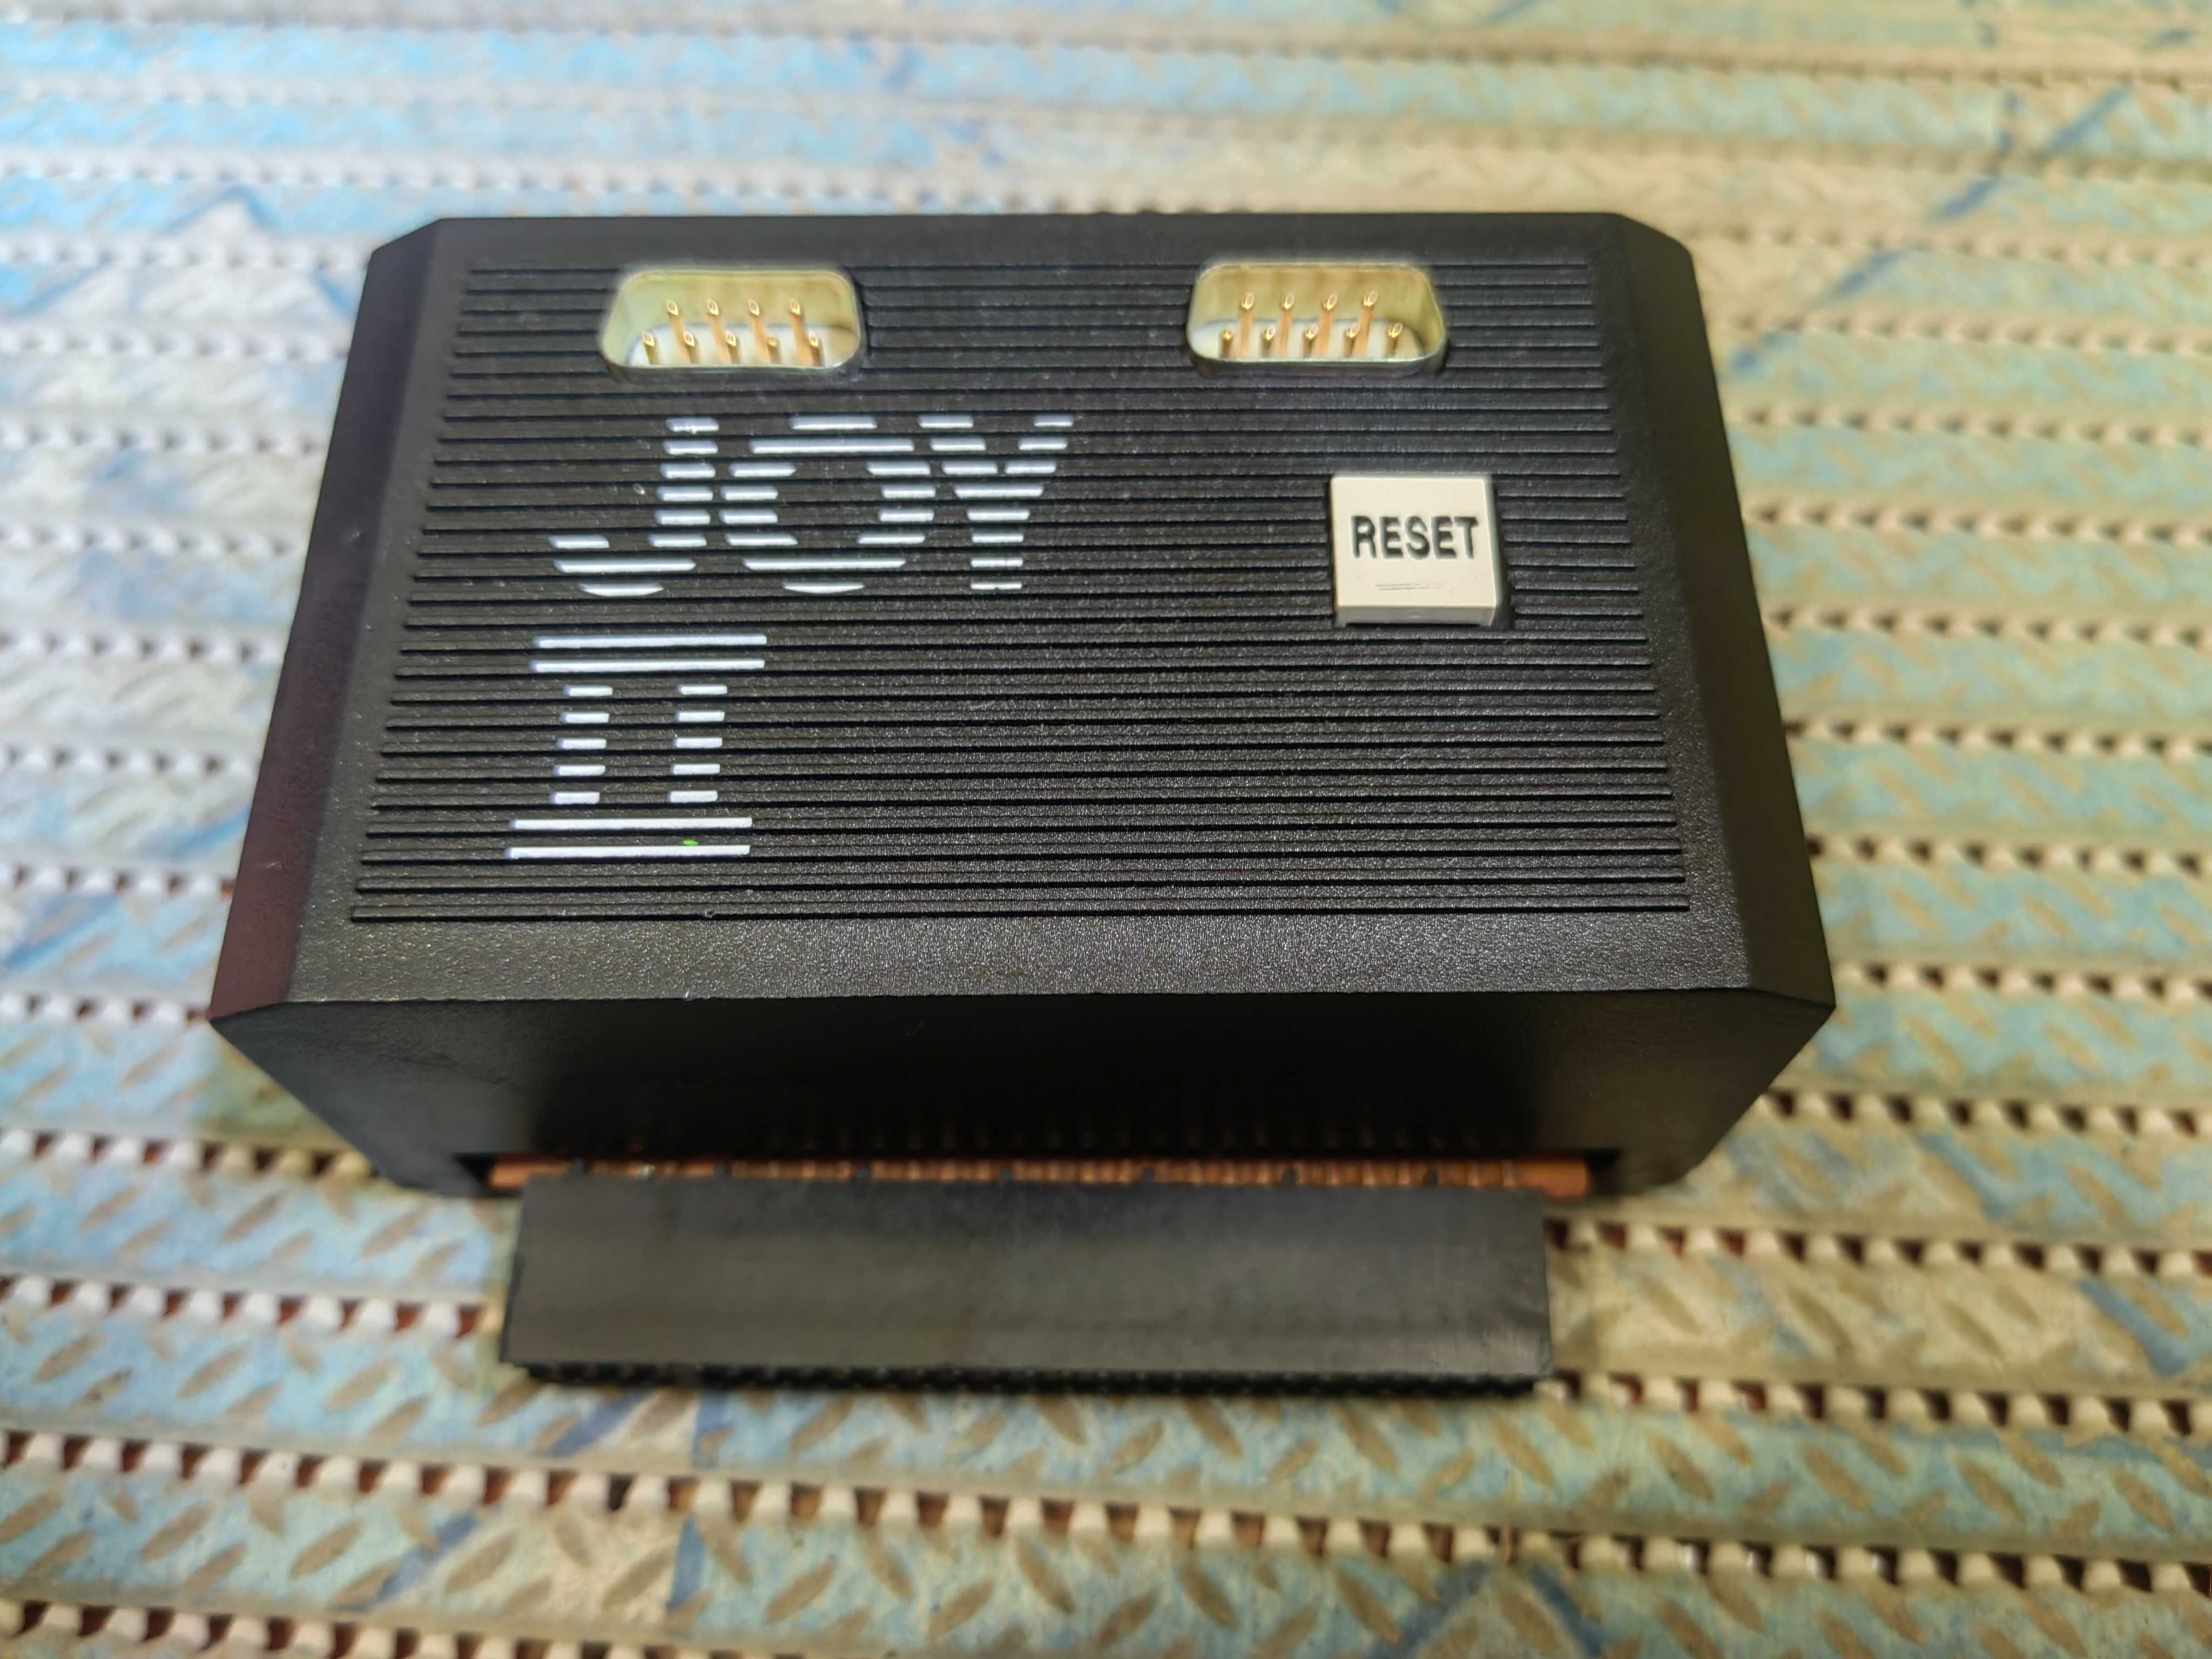 joy 2 jg componetes zx spectrum